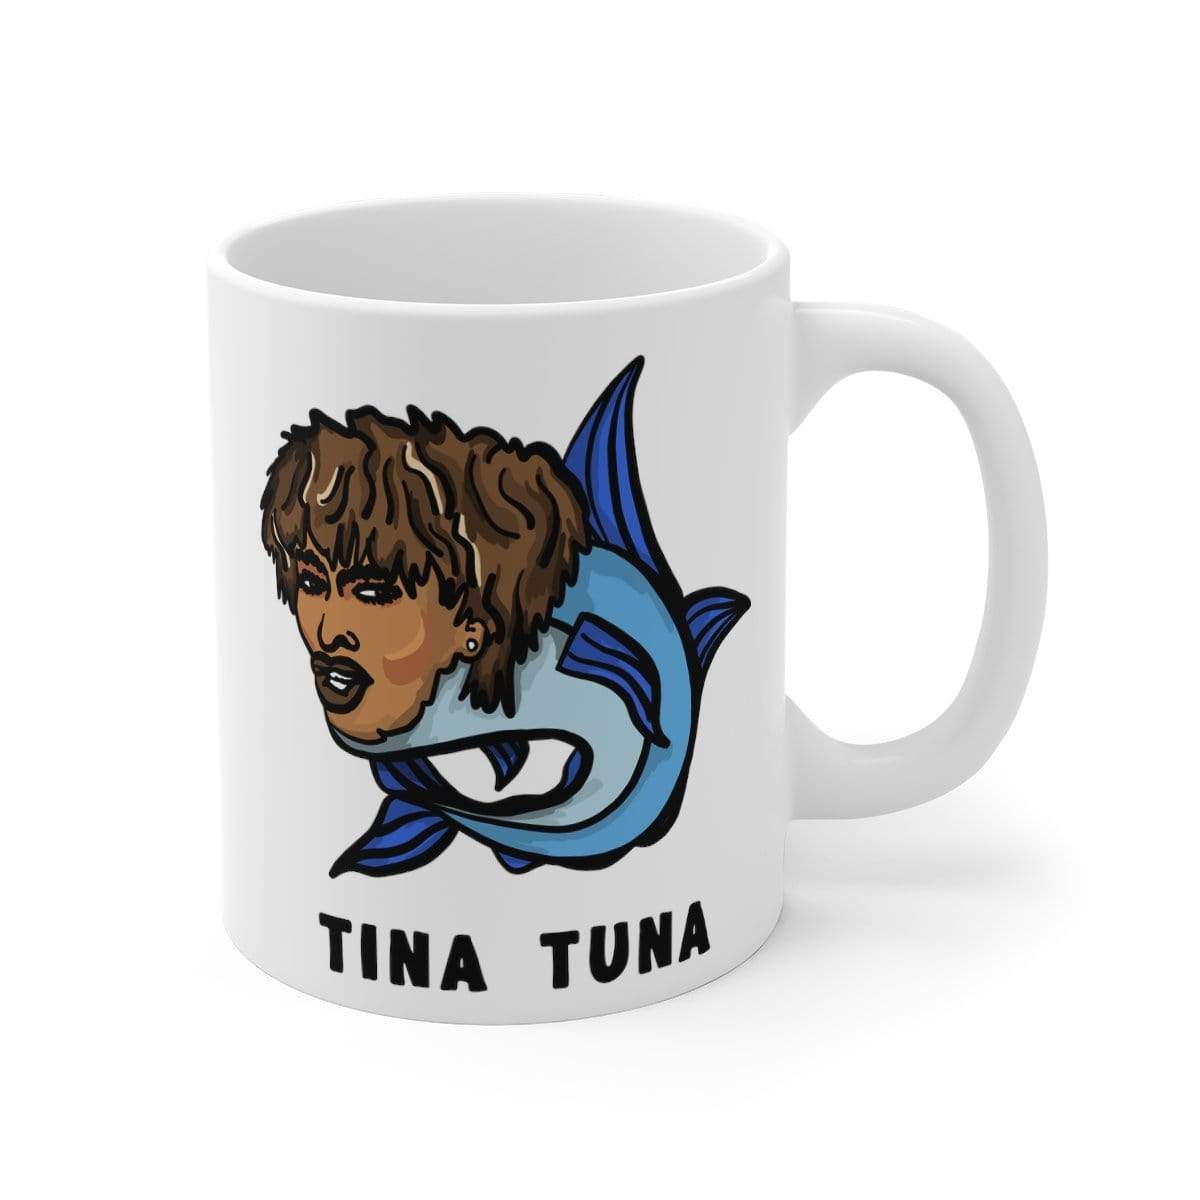 Tina Tuna 🐟 - Coffee Mug